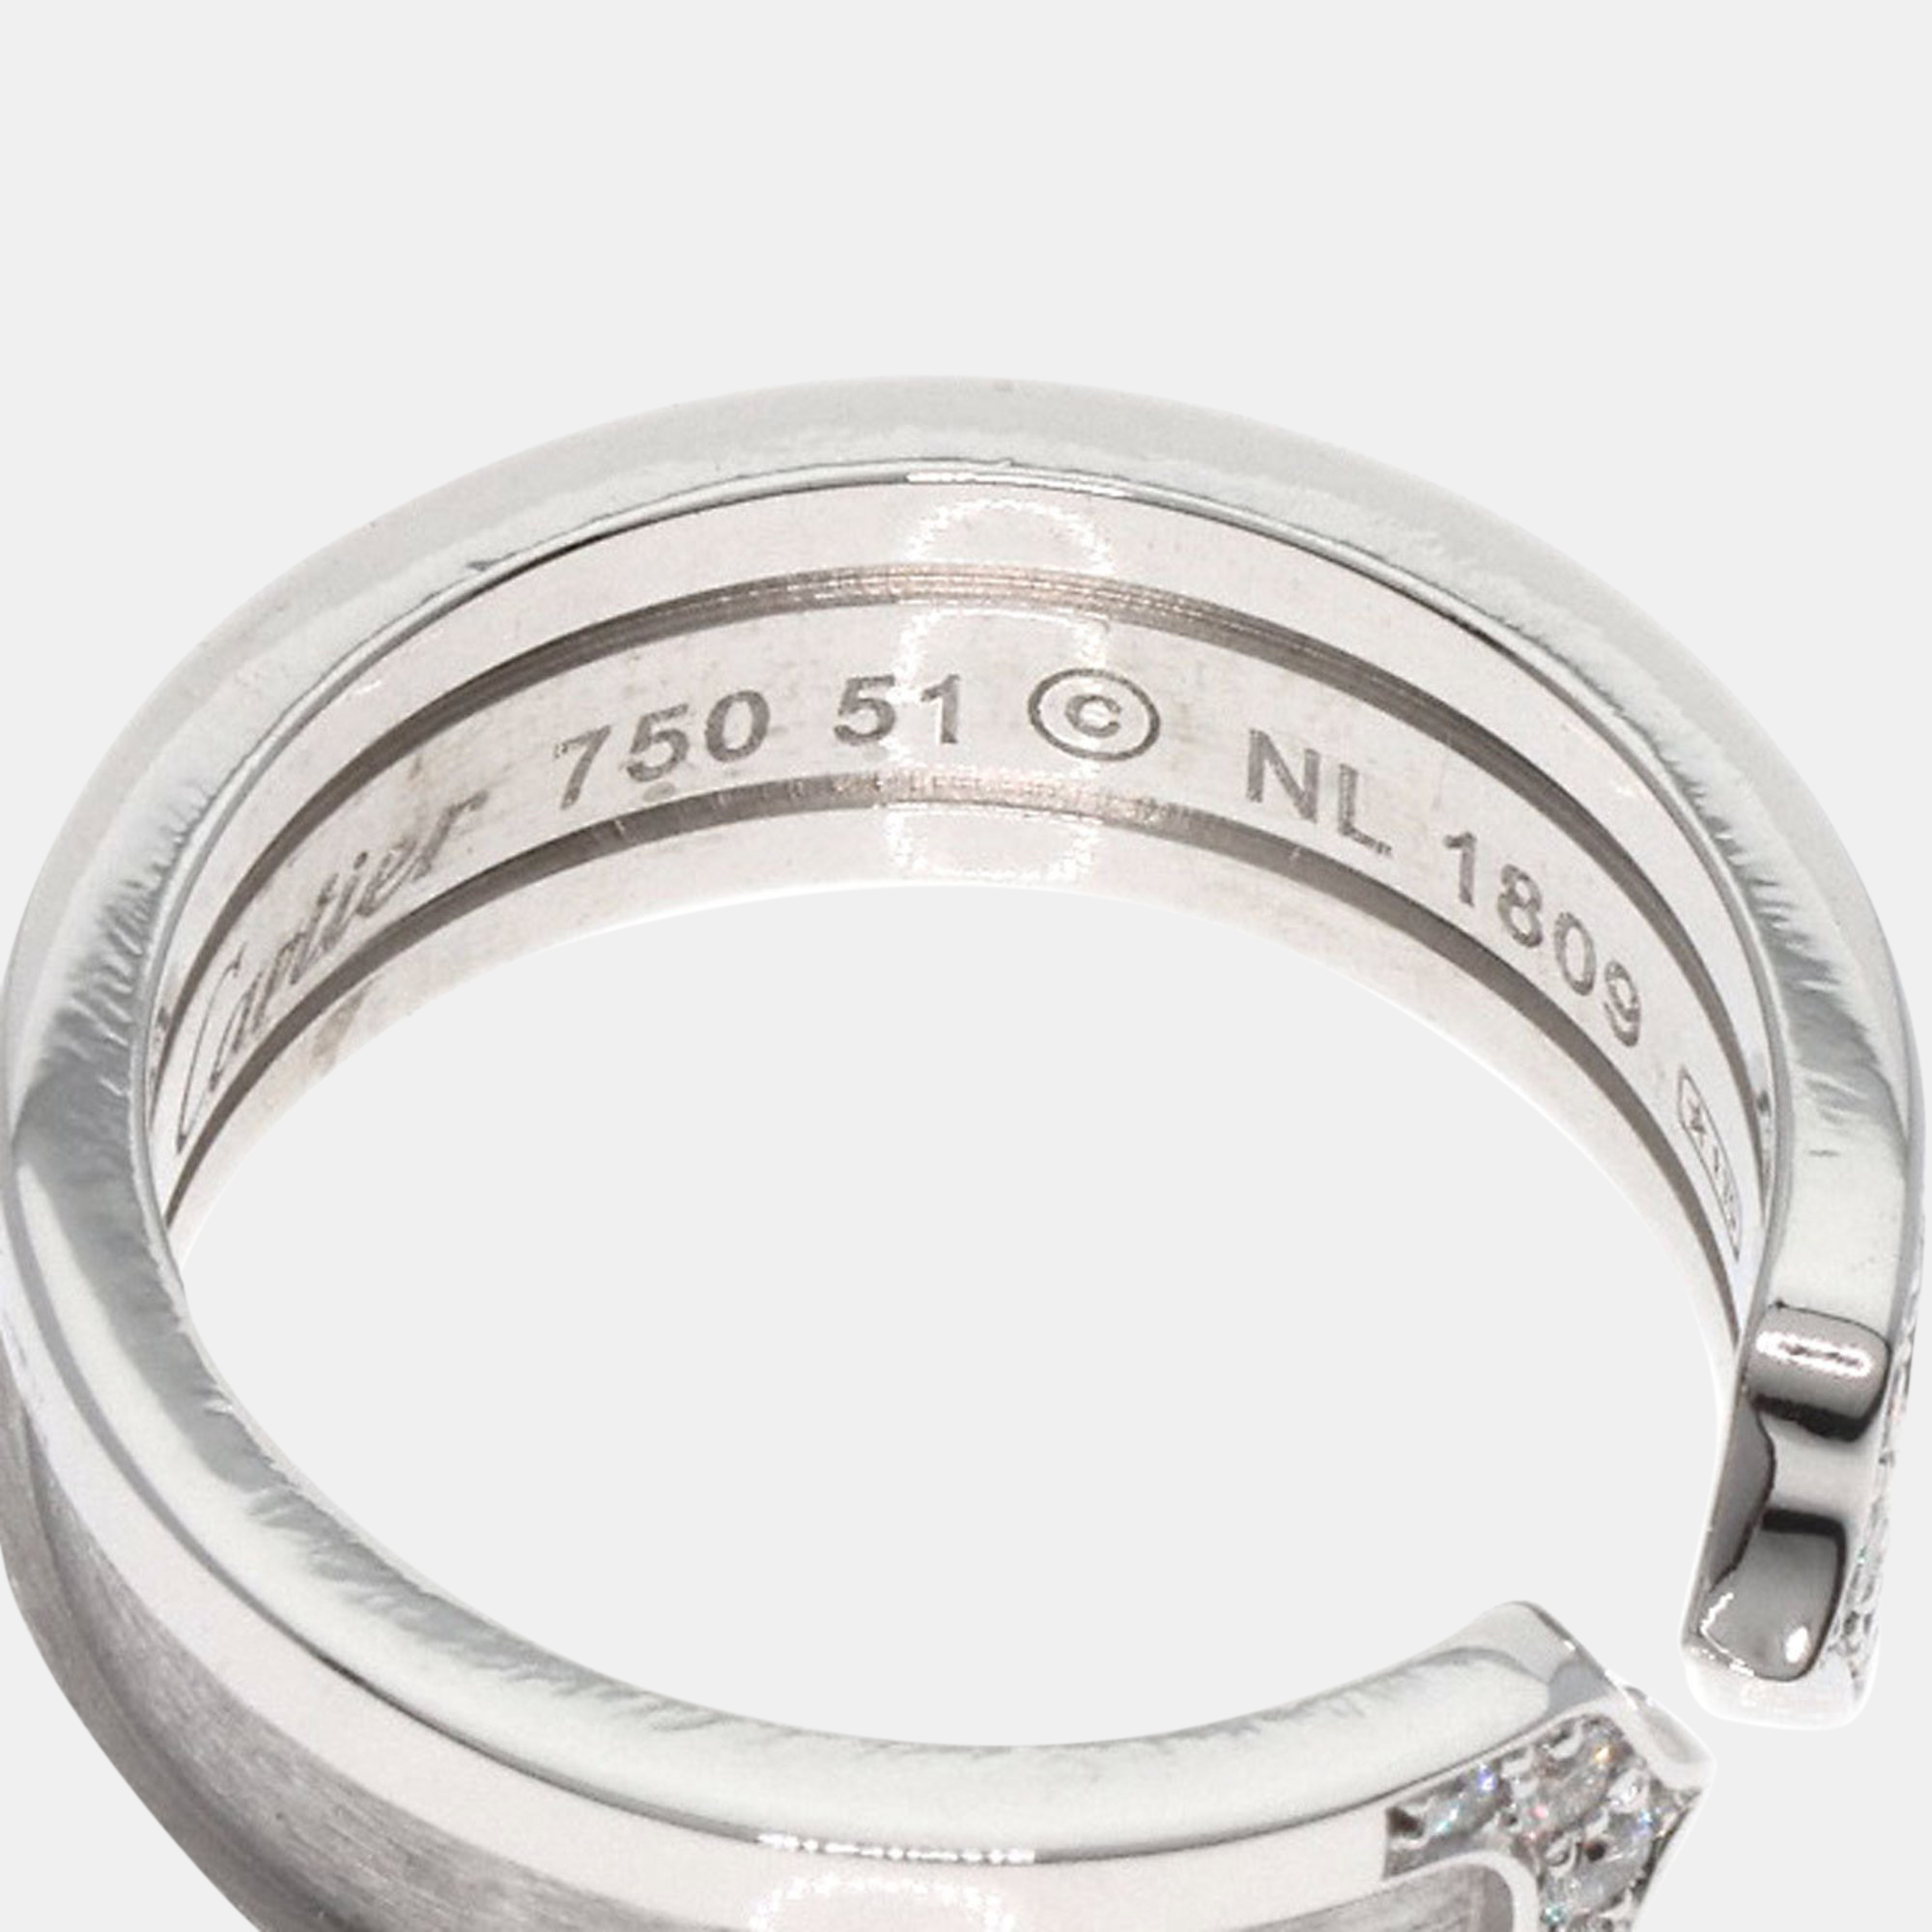 Cartier 18K White Gold And Diamond C De Cartier Band Ring EU 51